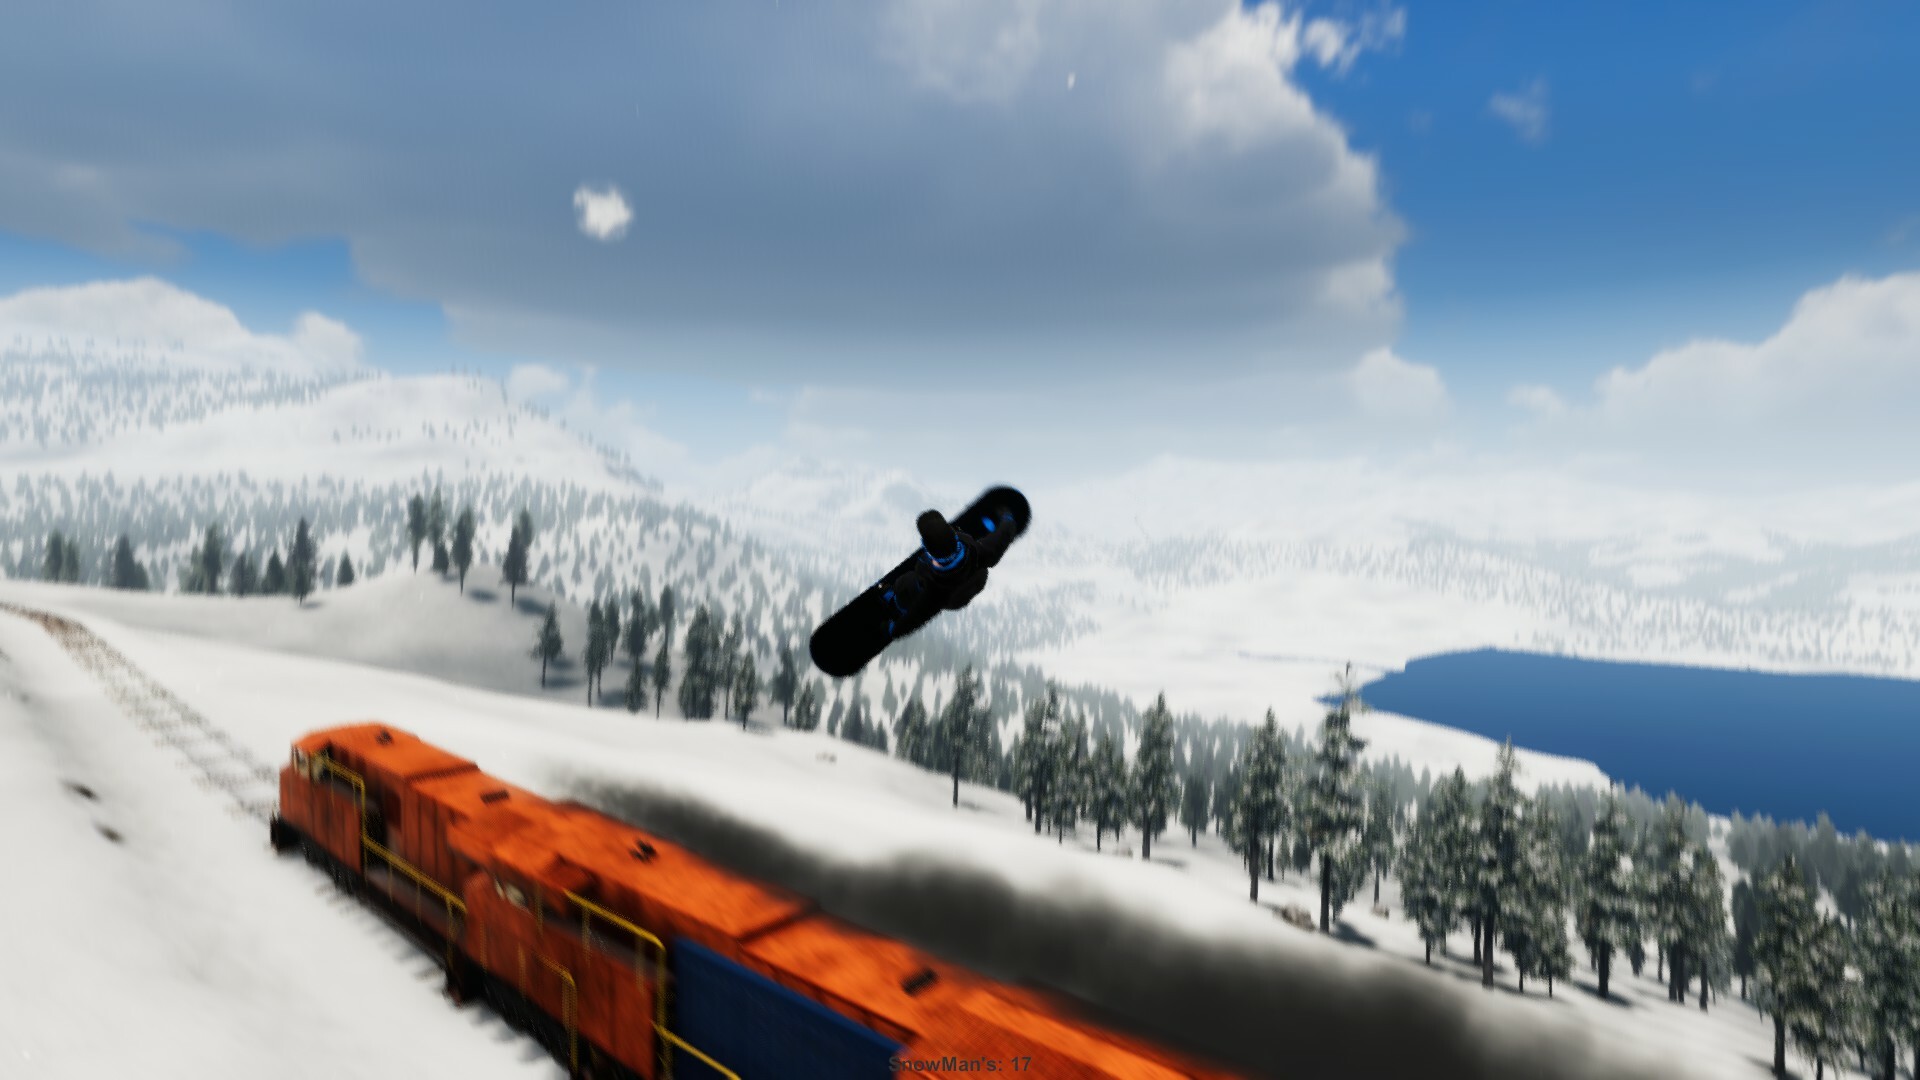 SNWBRD: Freestyle Snowboarding on Steam